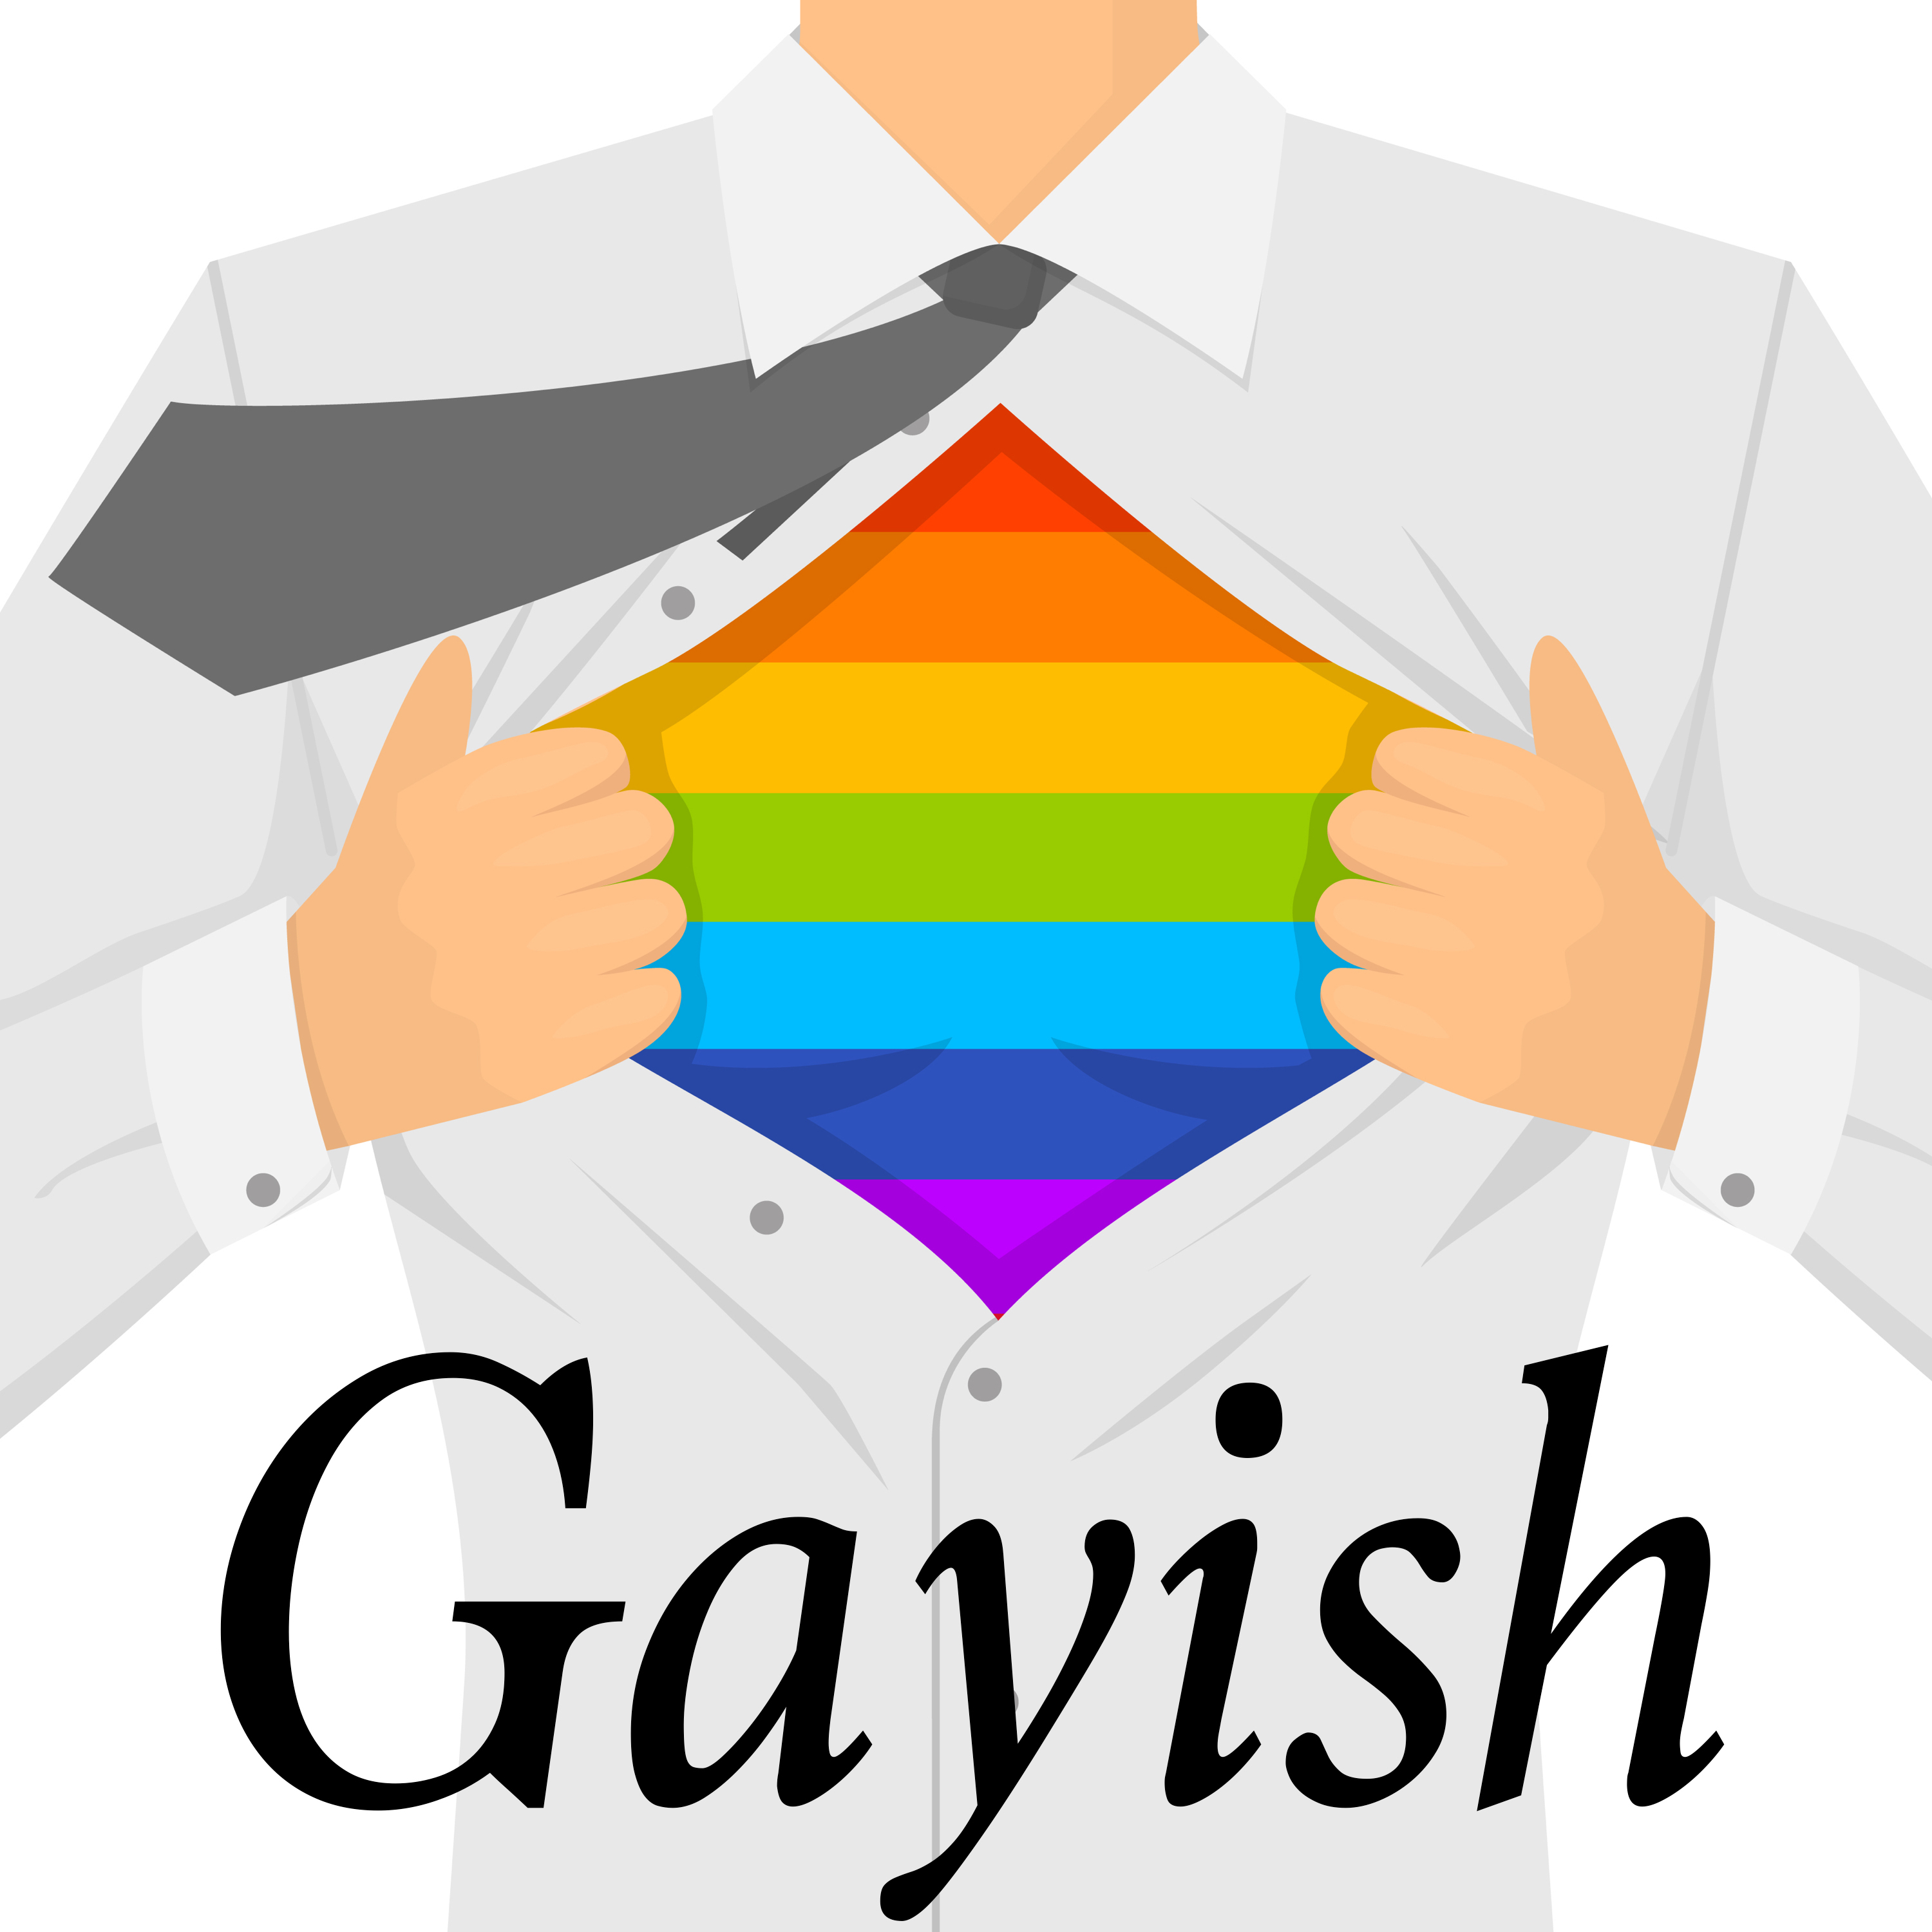 Gayish Podcast